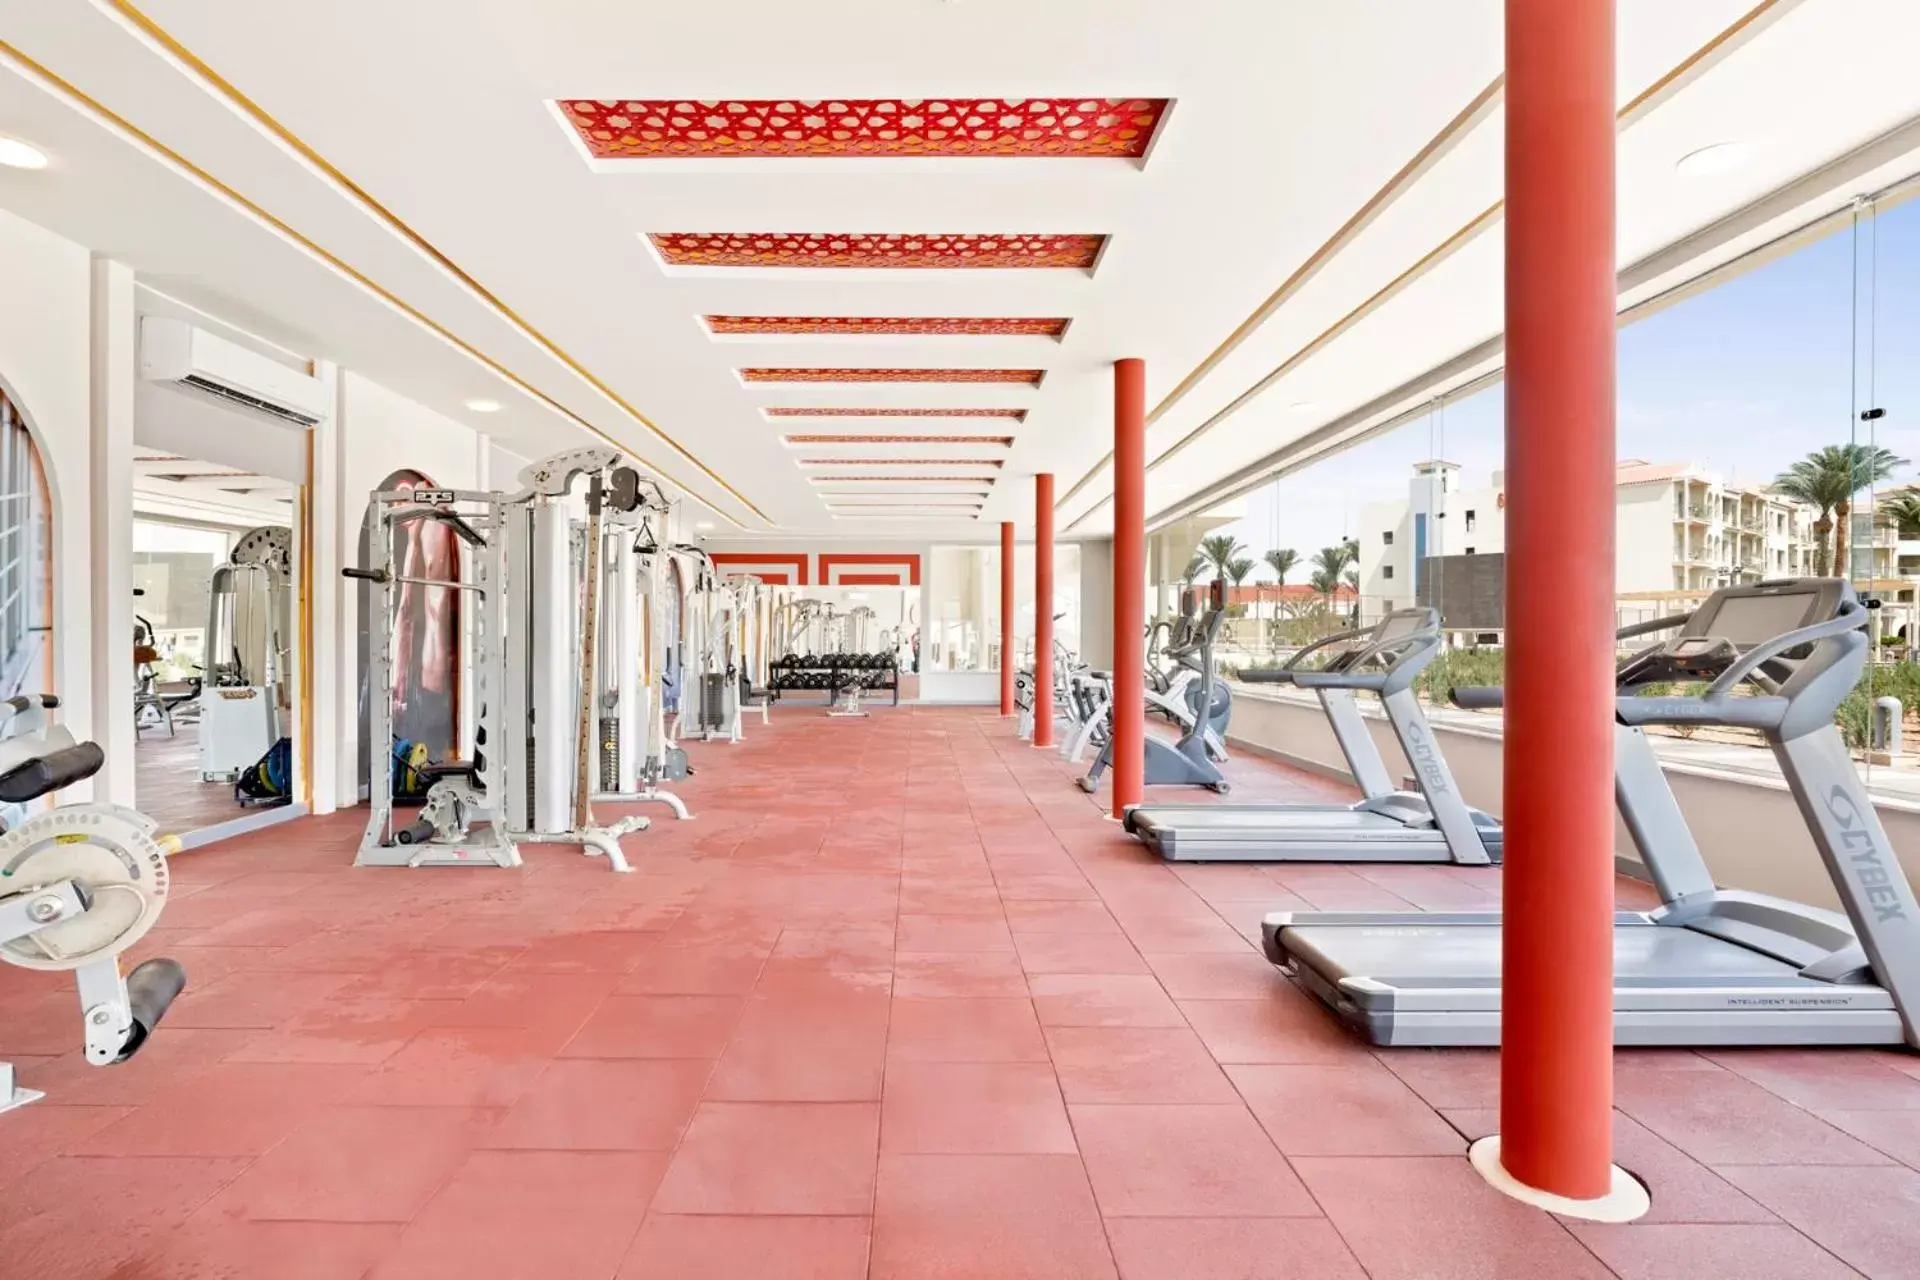 Fitness centre/facilities, Fitness Center/Facilities in Pickalbatros Dana Beach Resort - Hurghada